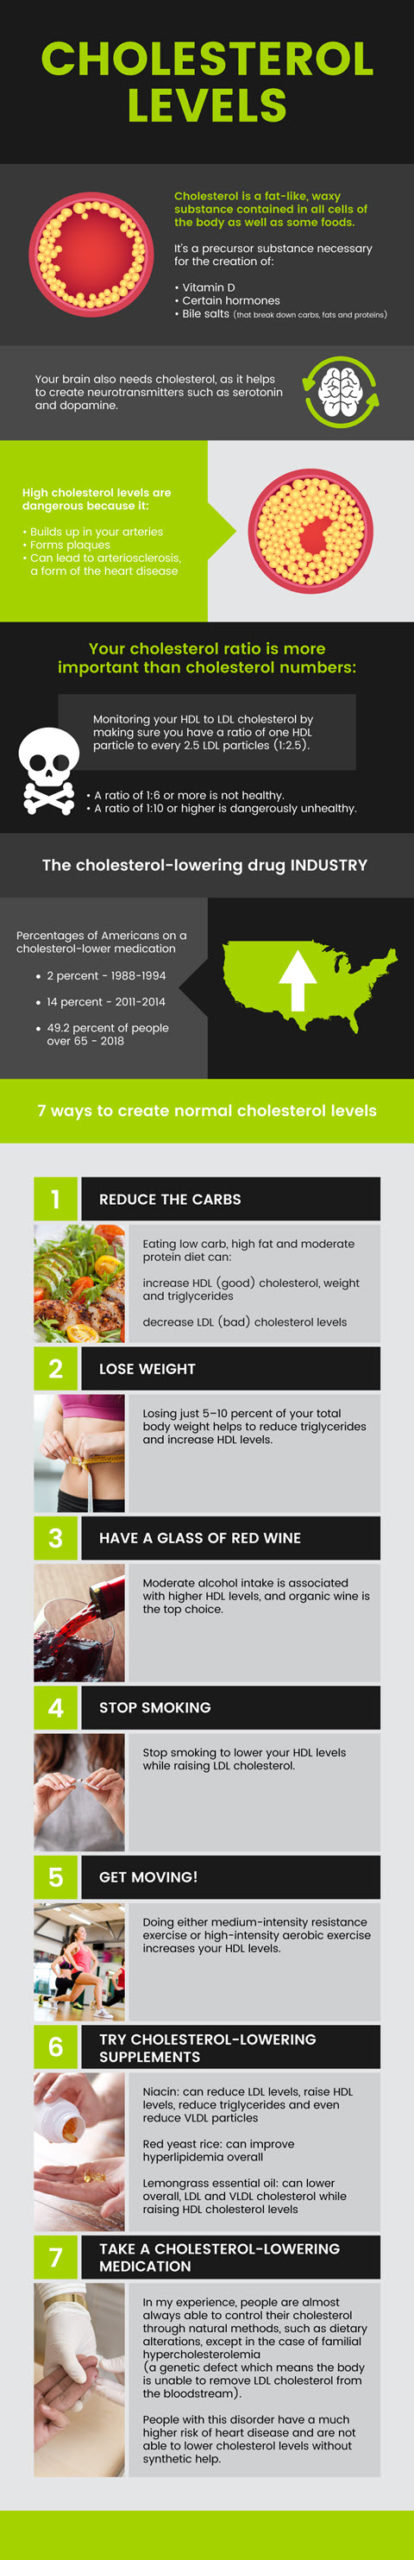 Normal cholesterol levels - MKexpress.net